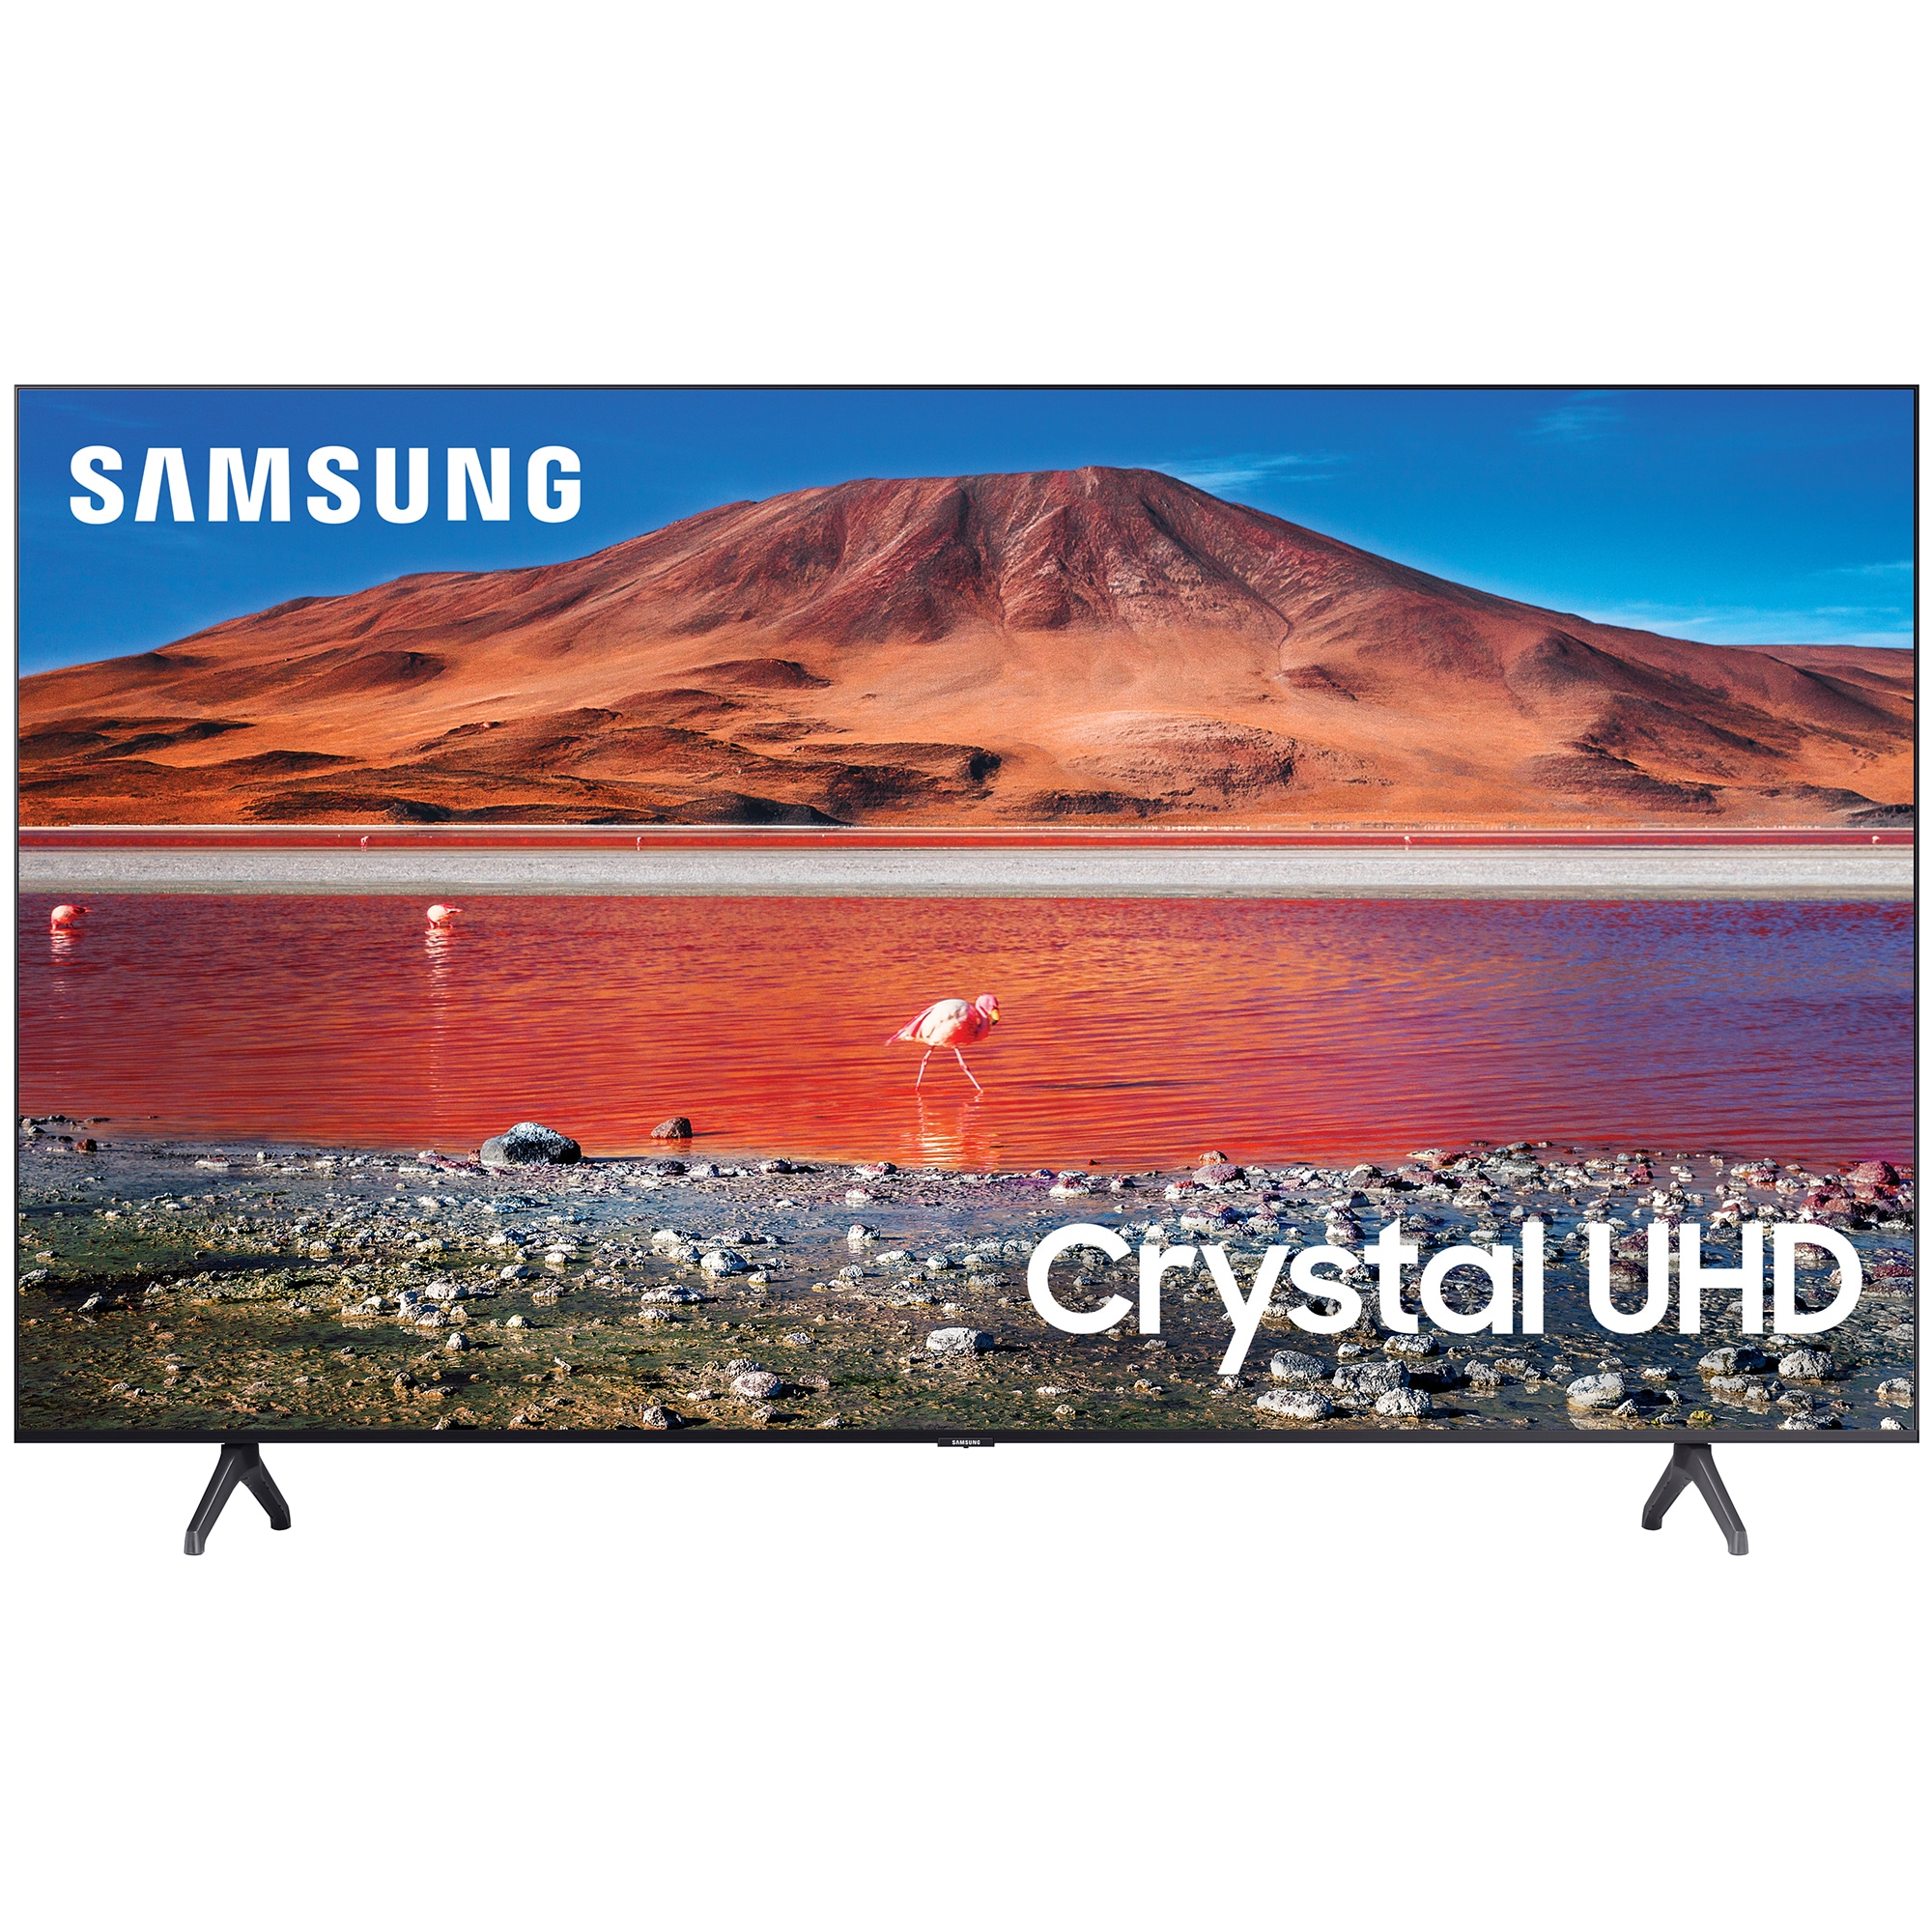 Samsung Tu7000 Series 65 4k 2160p Uhd Smart Tv With Hdr Model Pcrichard Com Un65tu7000